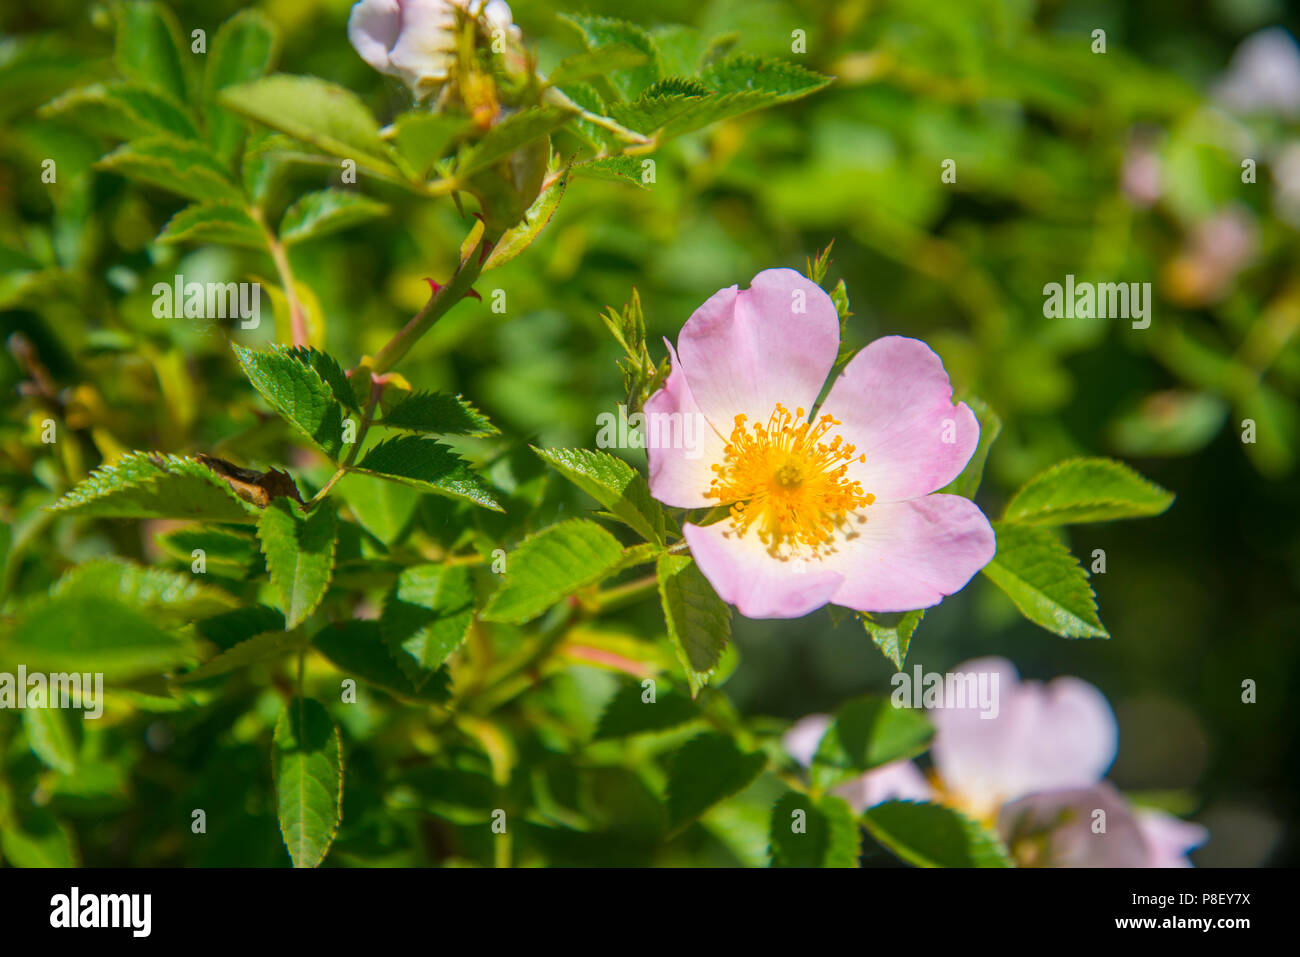 Wild rose flower. Stock Photo